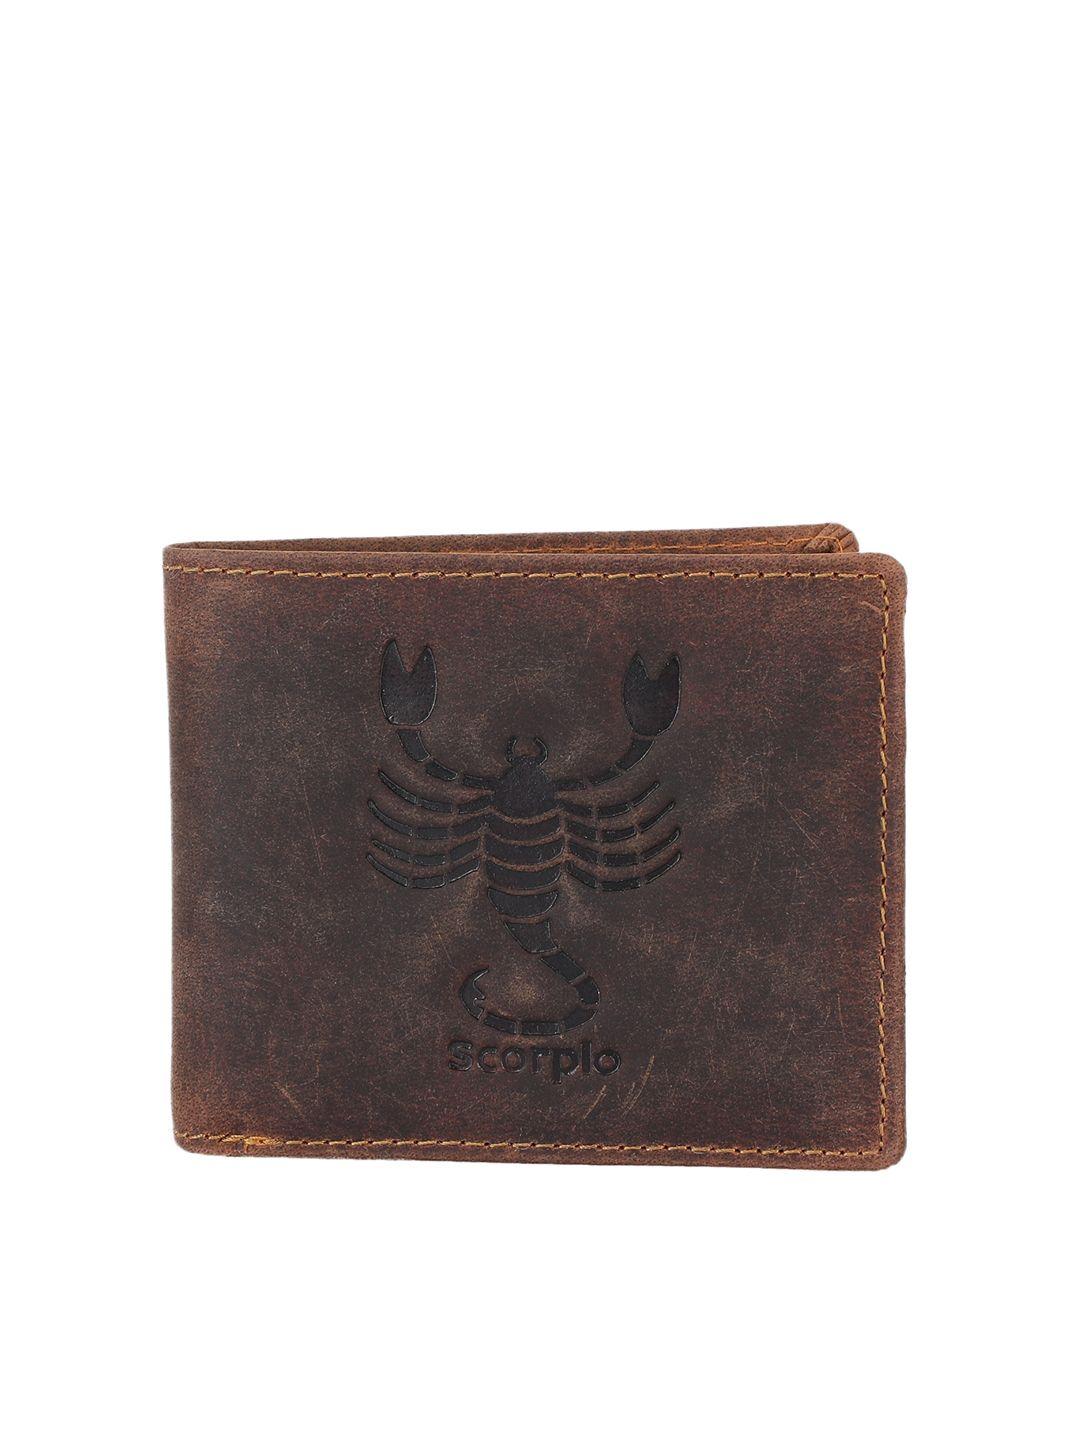 alvaro castagnino men brown & black printed leather two fold wallet